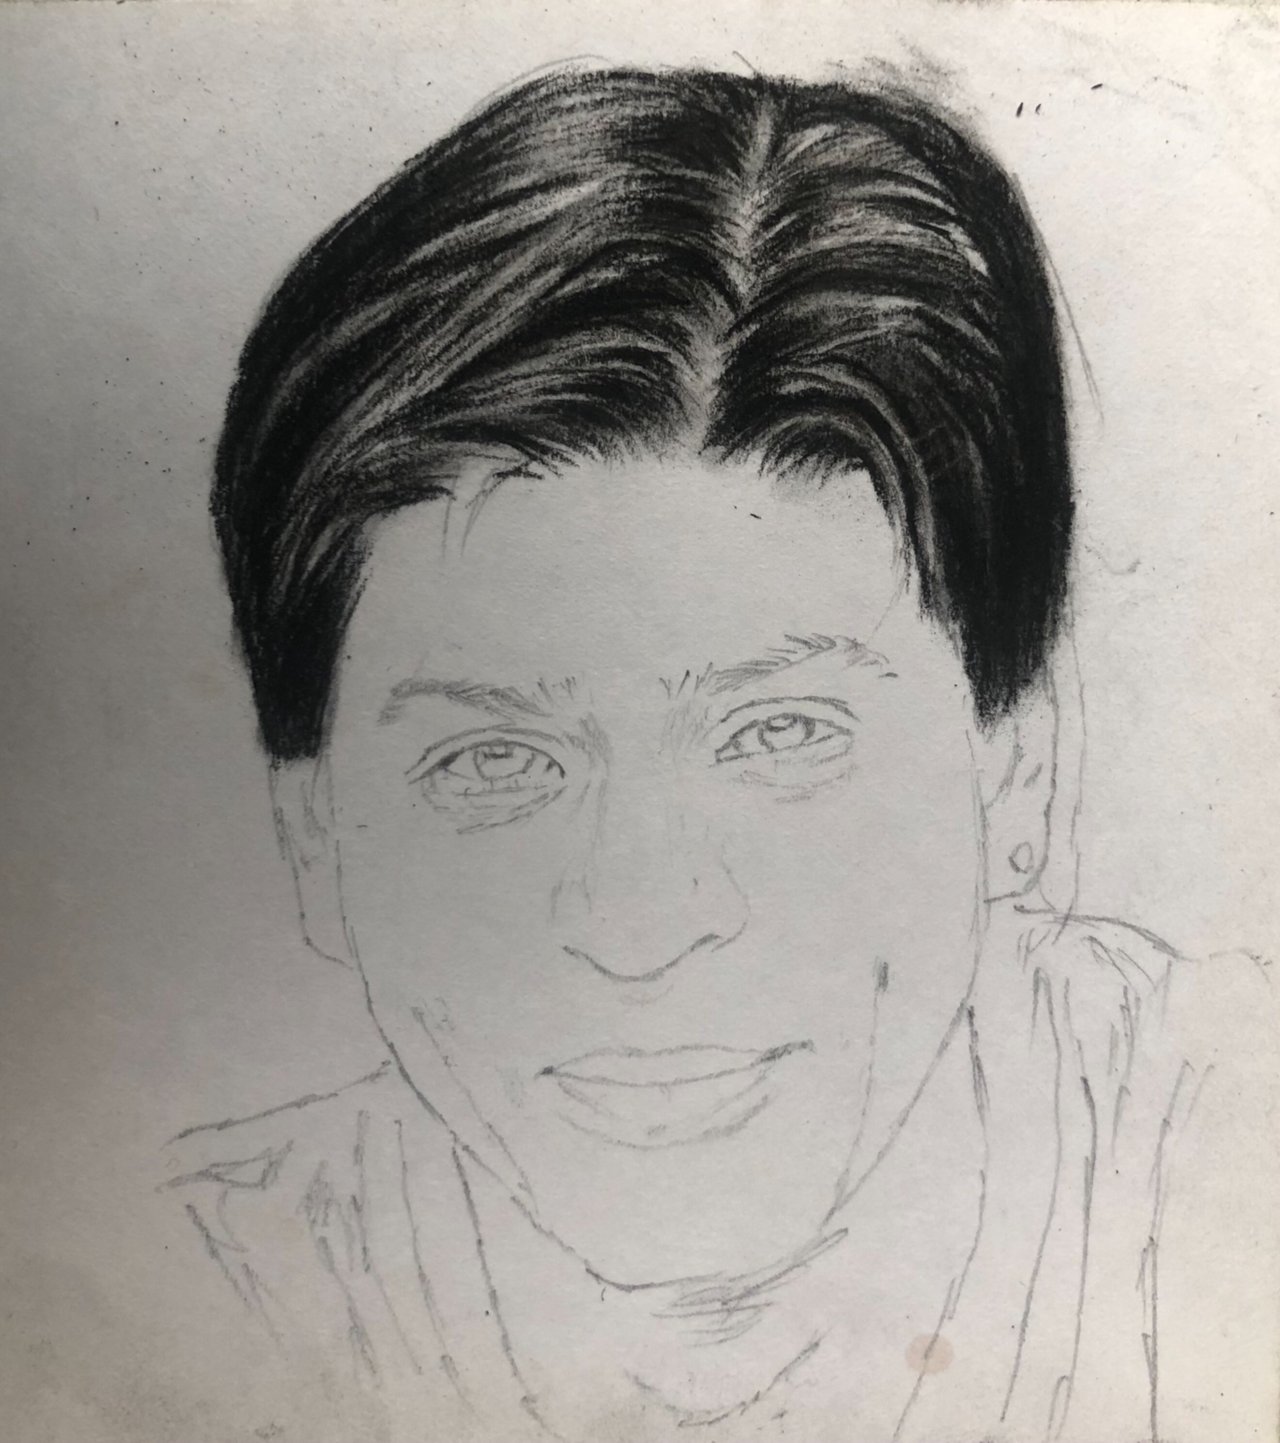 Coloured pencil Sketch of Shahrukh Khan. by Iamsahilartist on DeviantArt